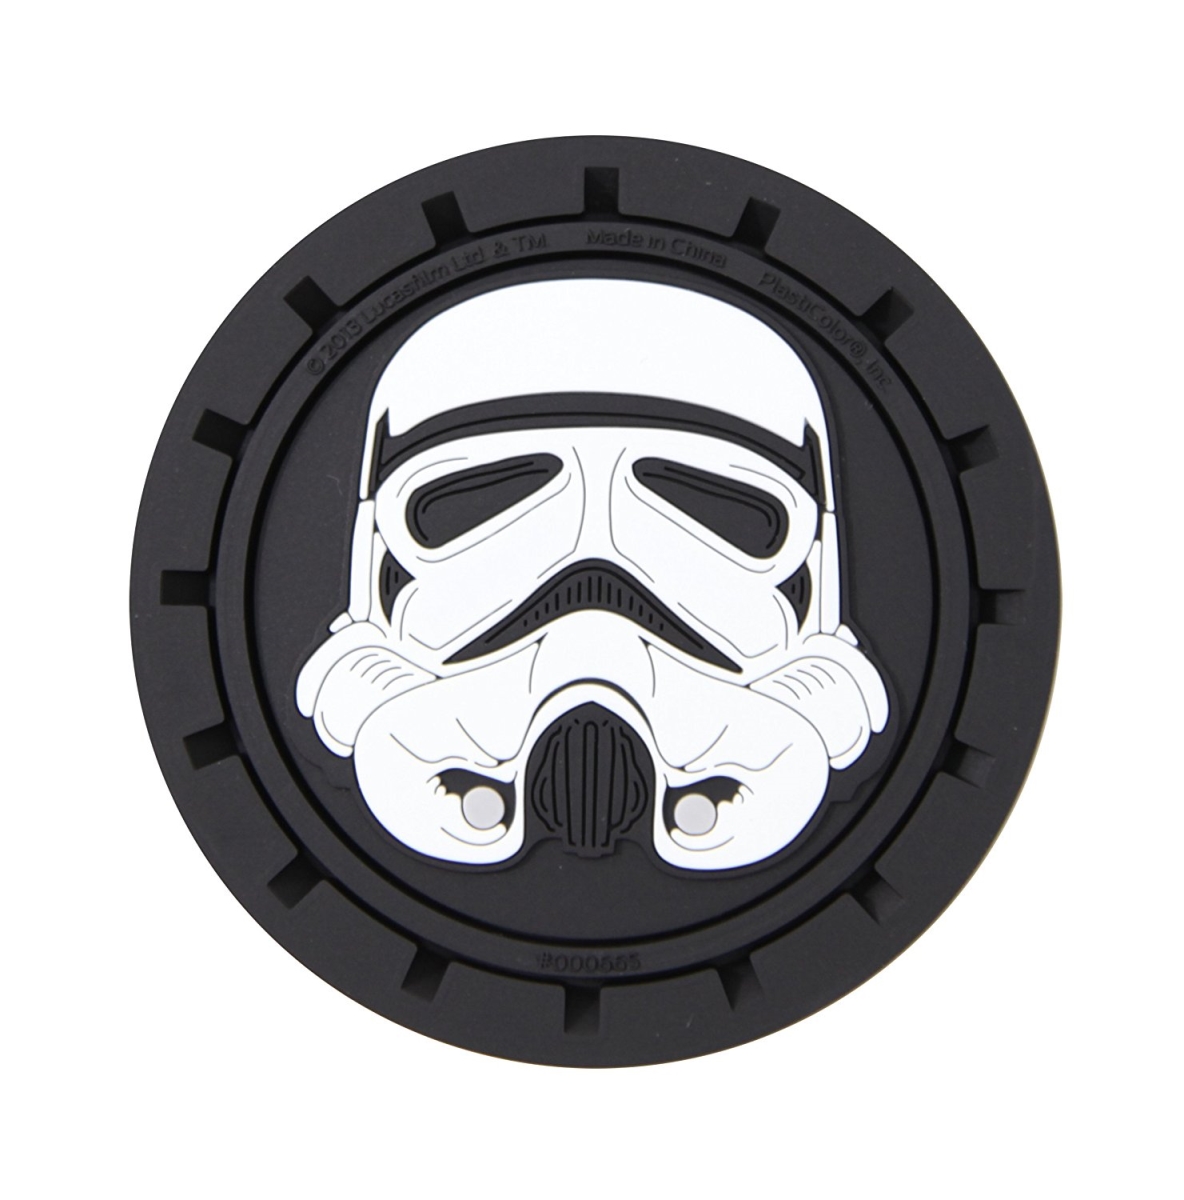 Star Wars Stormtrooper Cup Holder Coaster